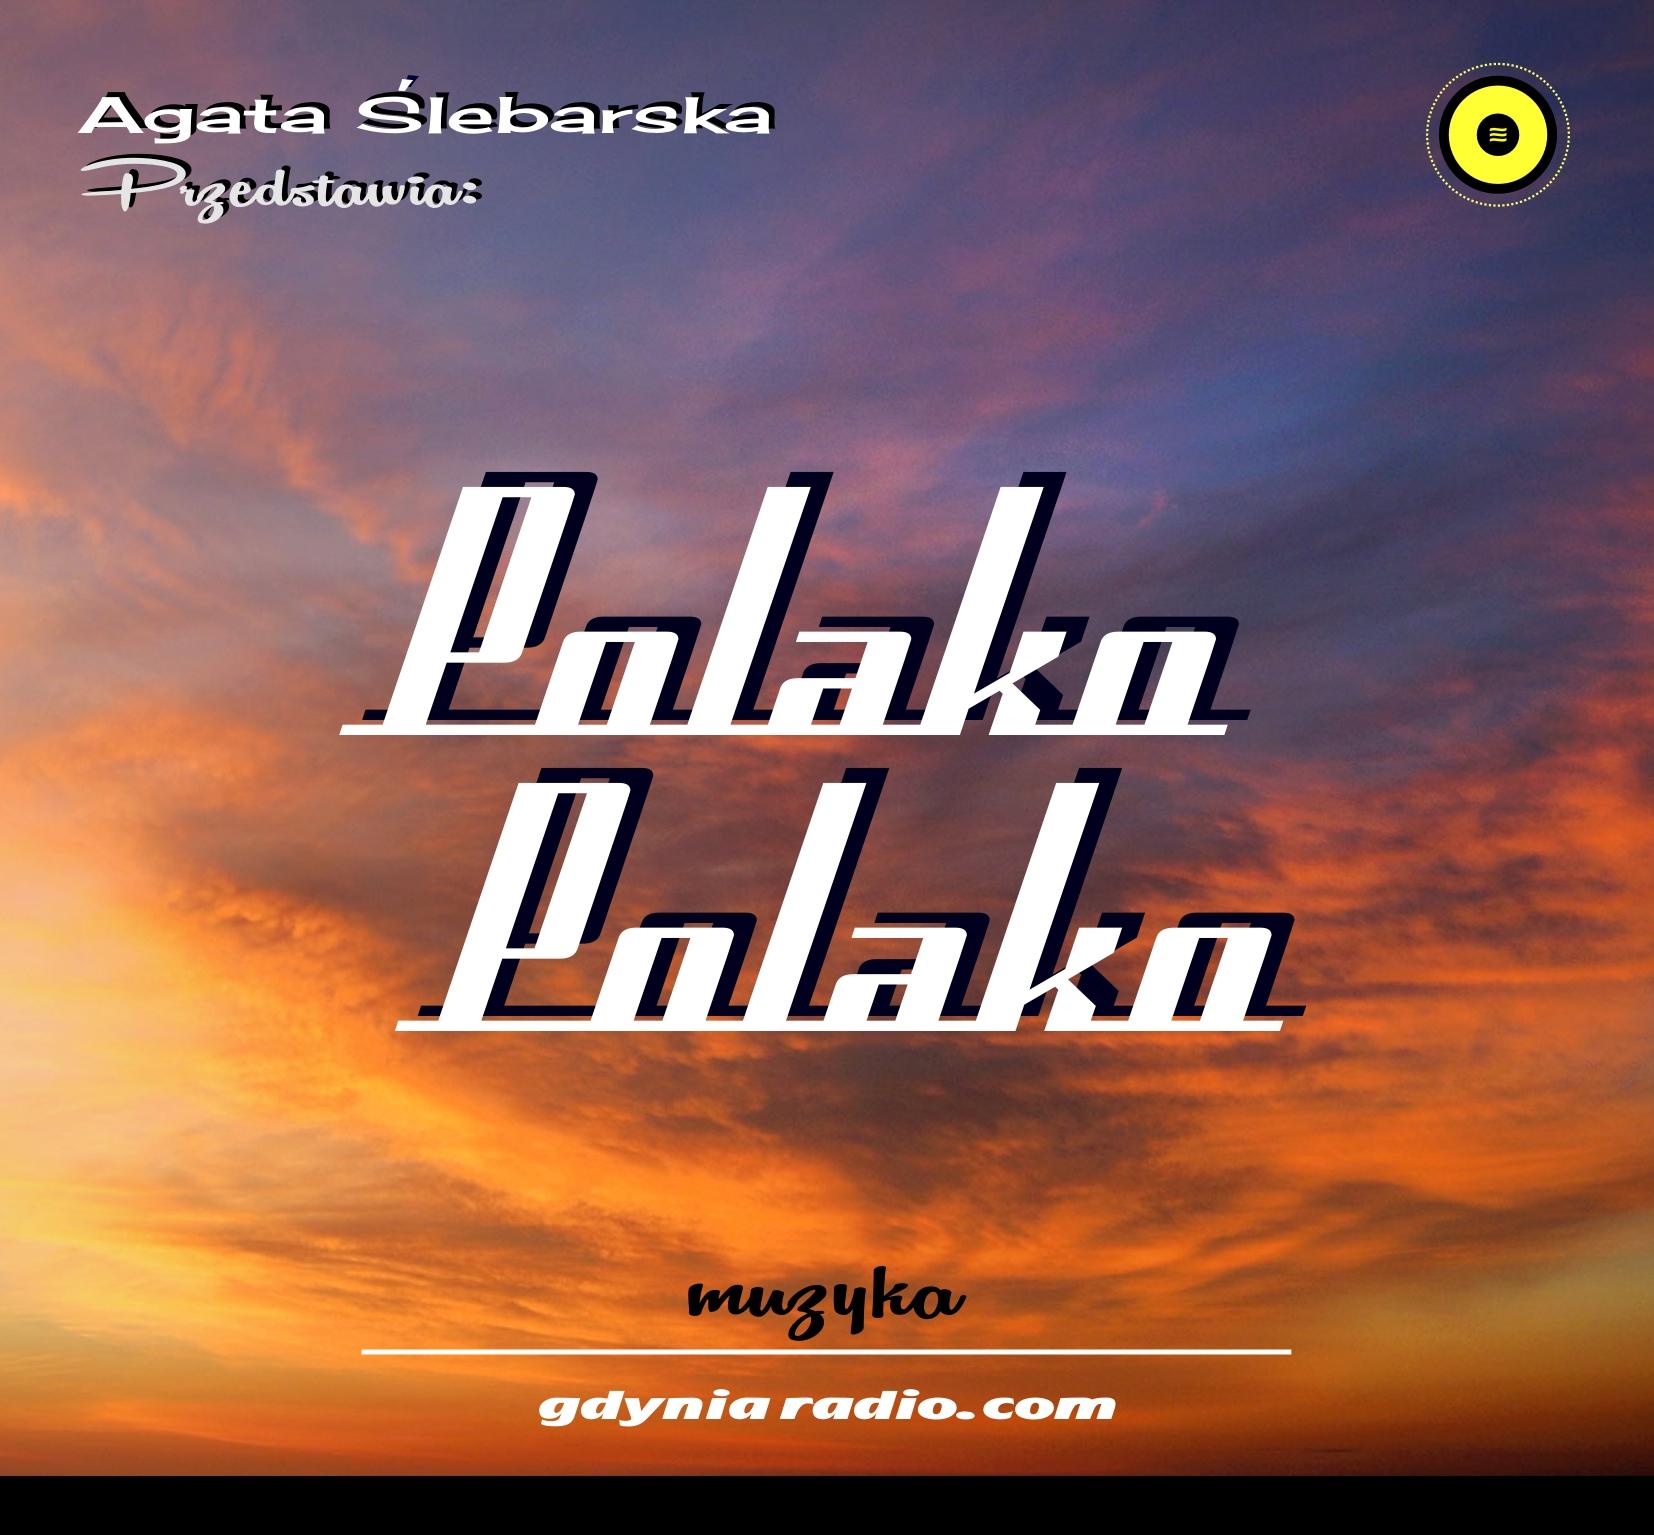 Gdynia Radio -2021m- Polako polako - Agata Slebarska